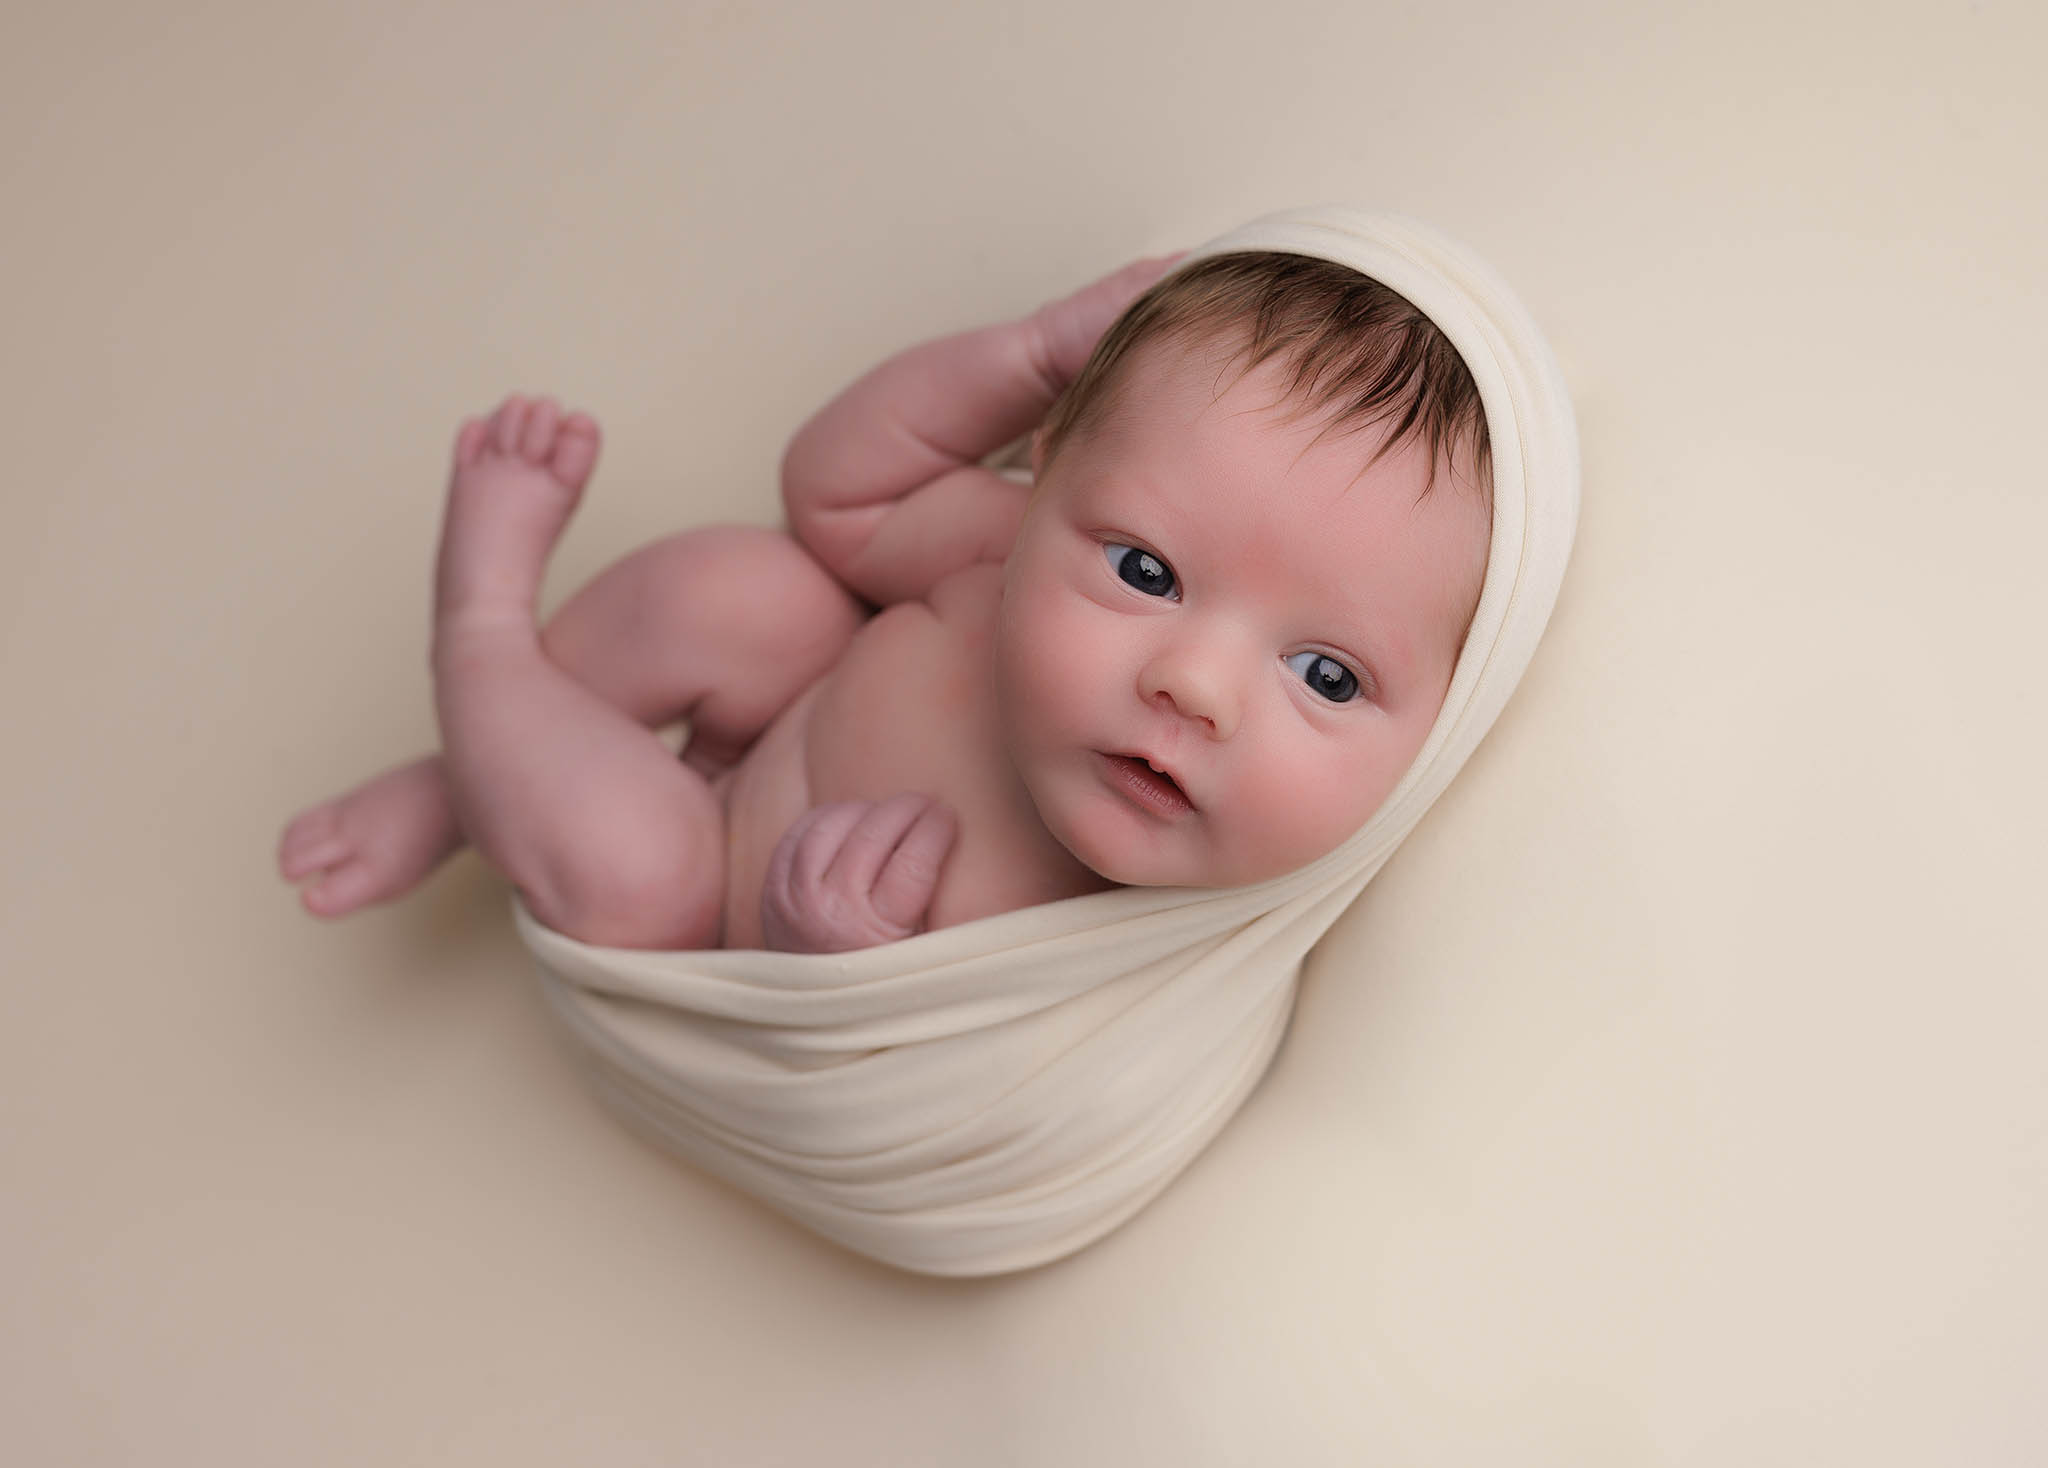 Newborn photographer in Milton Keynes captures image of baby boy with beautiful parents